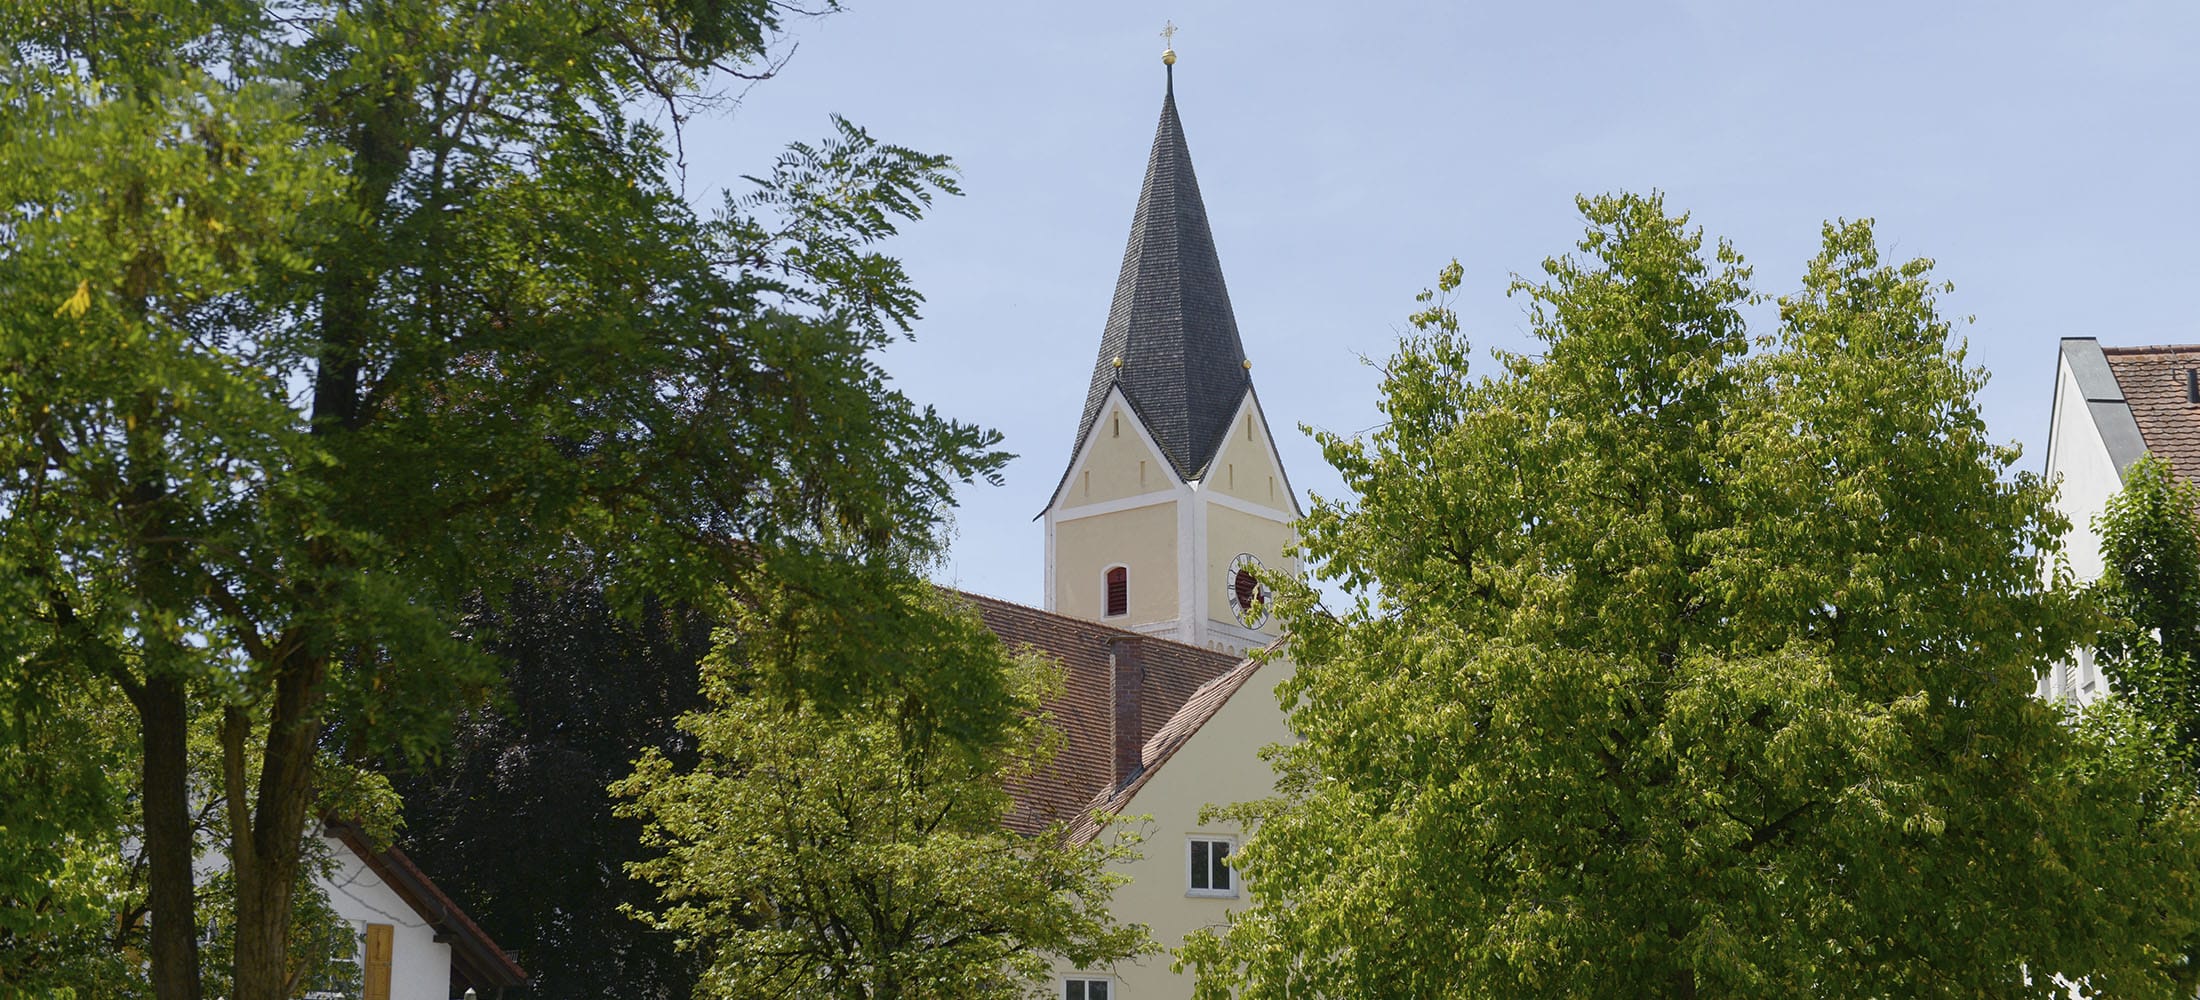 Dorfkirche im Sommer | Syn-Garching